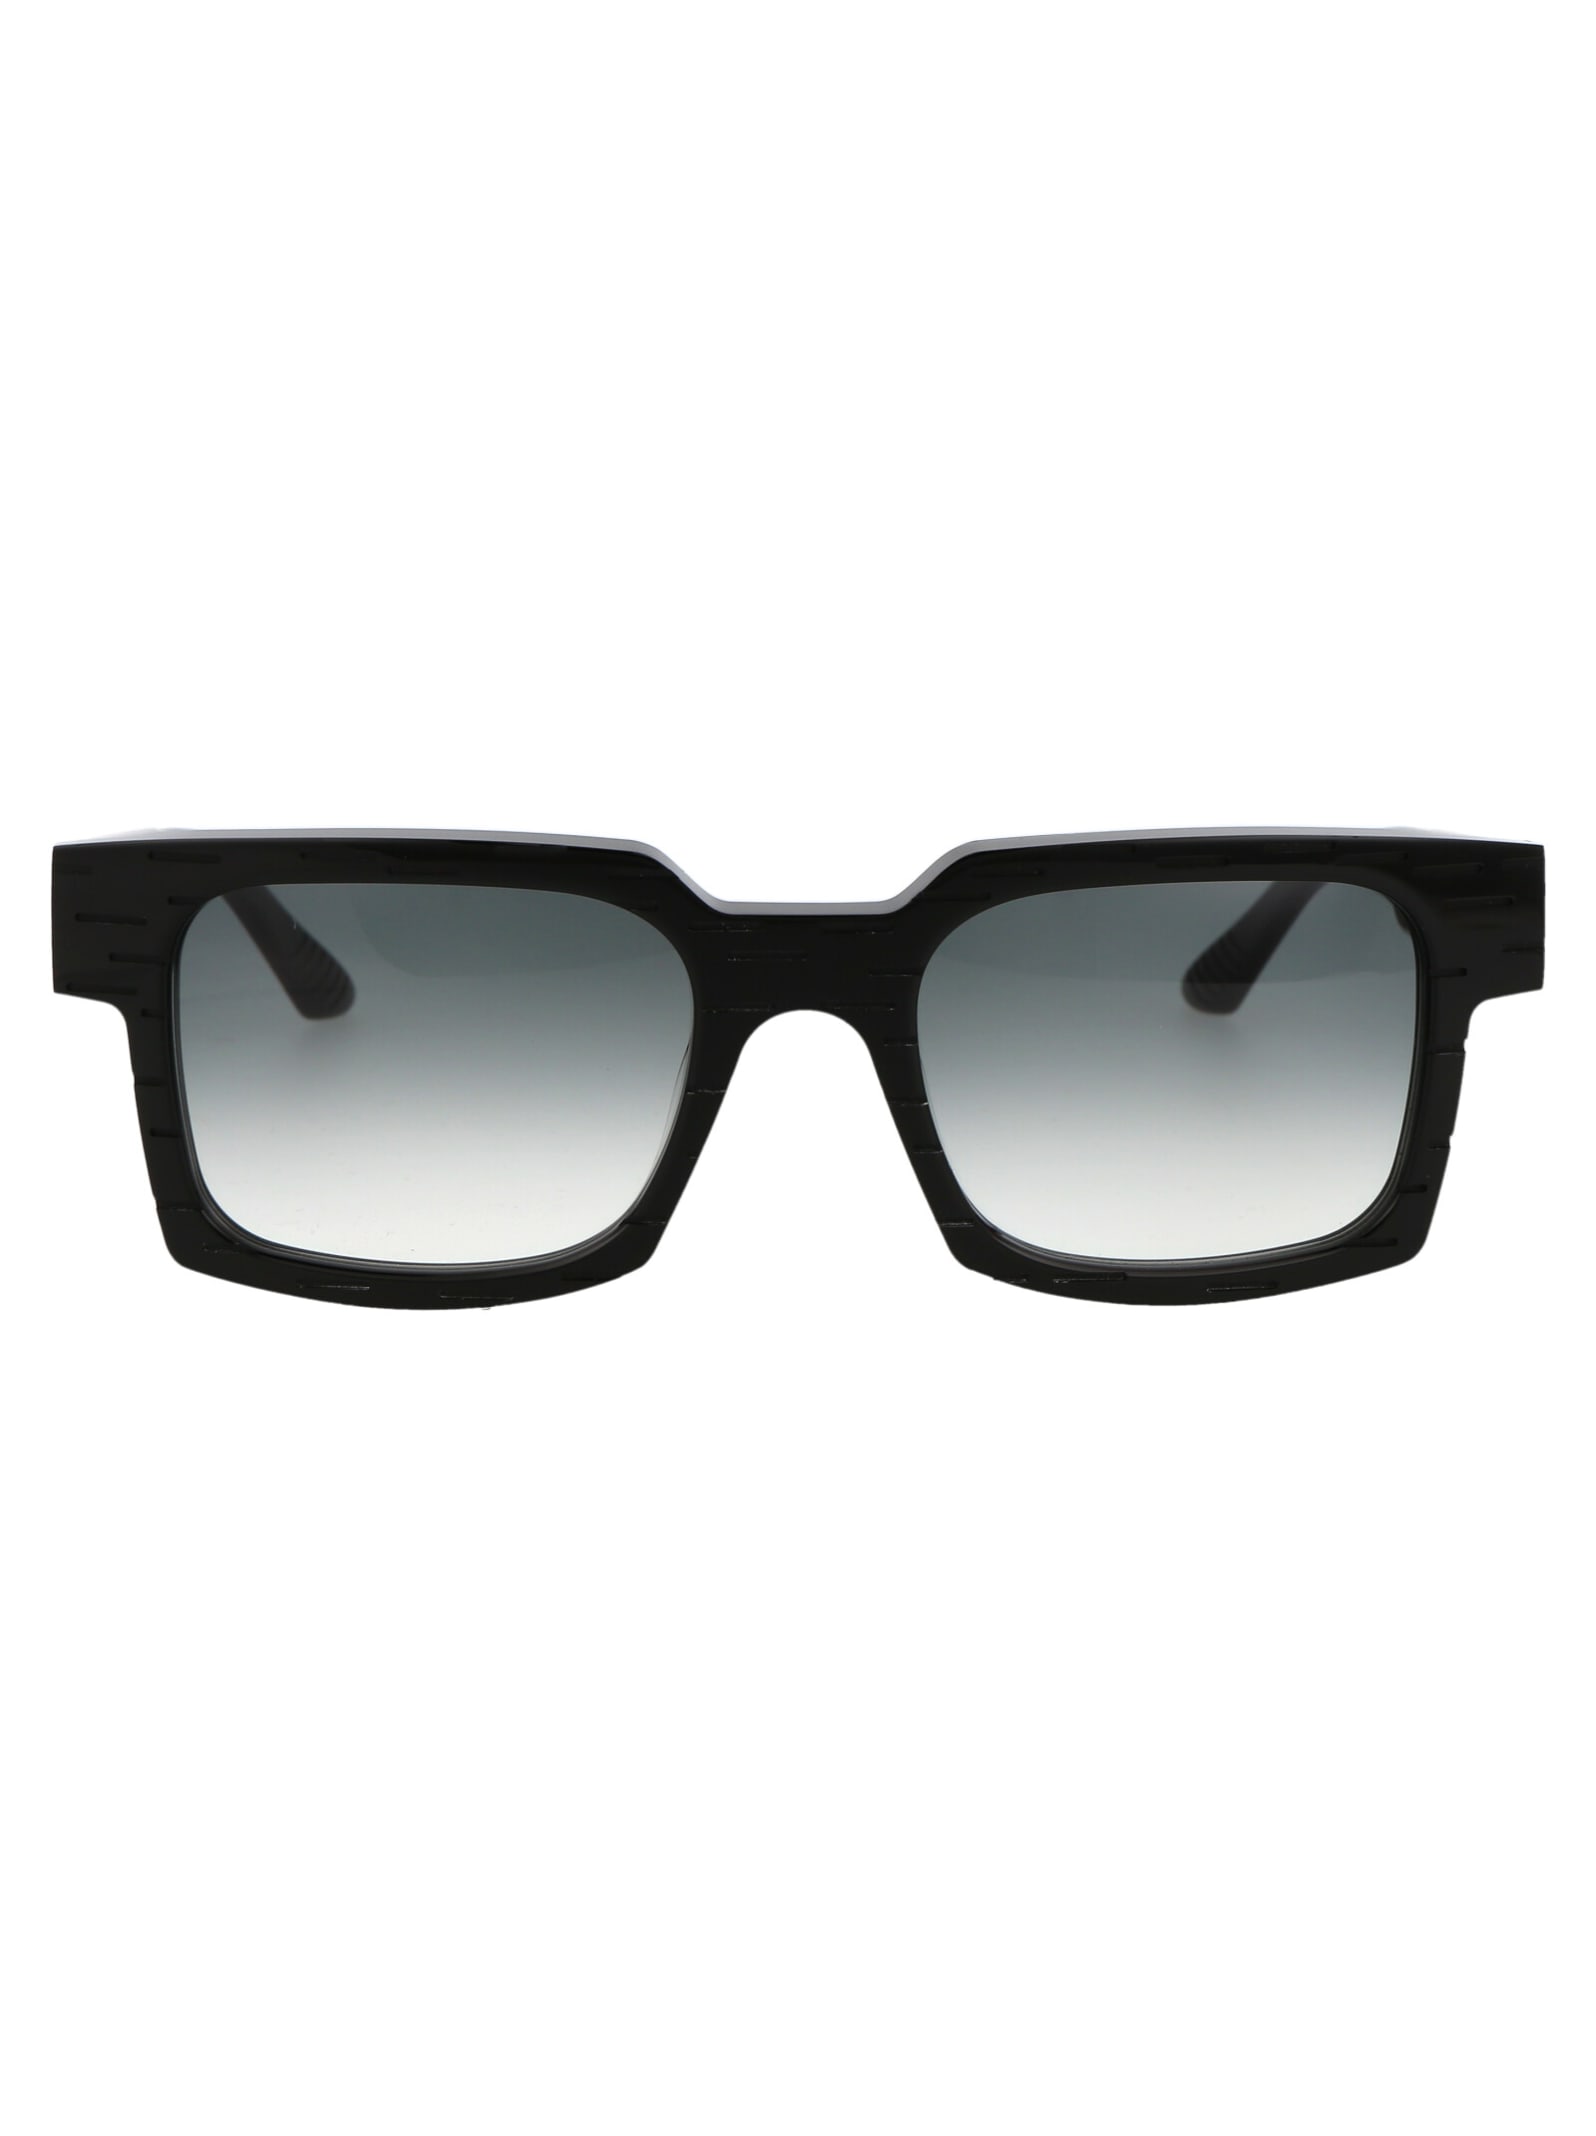 Yohji Yamamoto Slook 001 Sunglasses